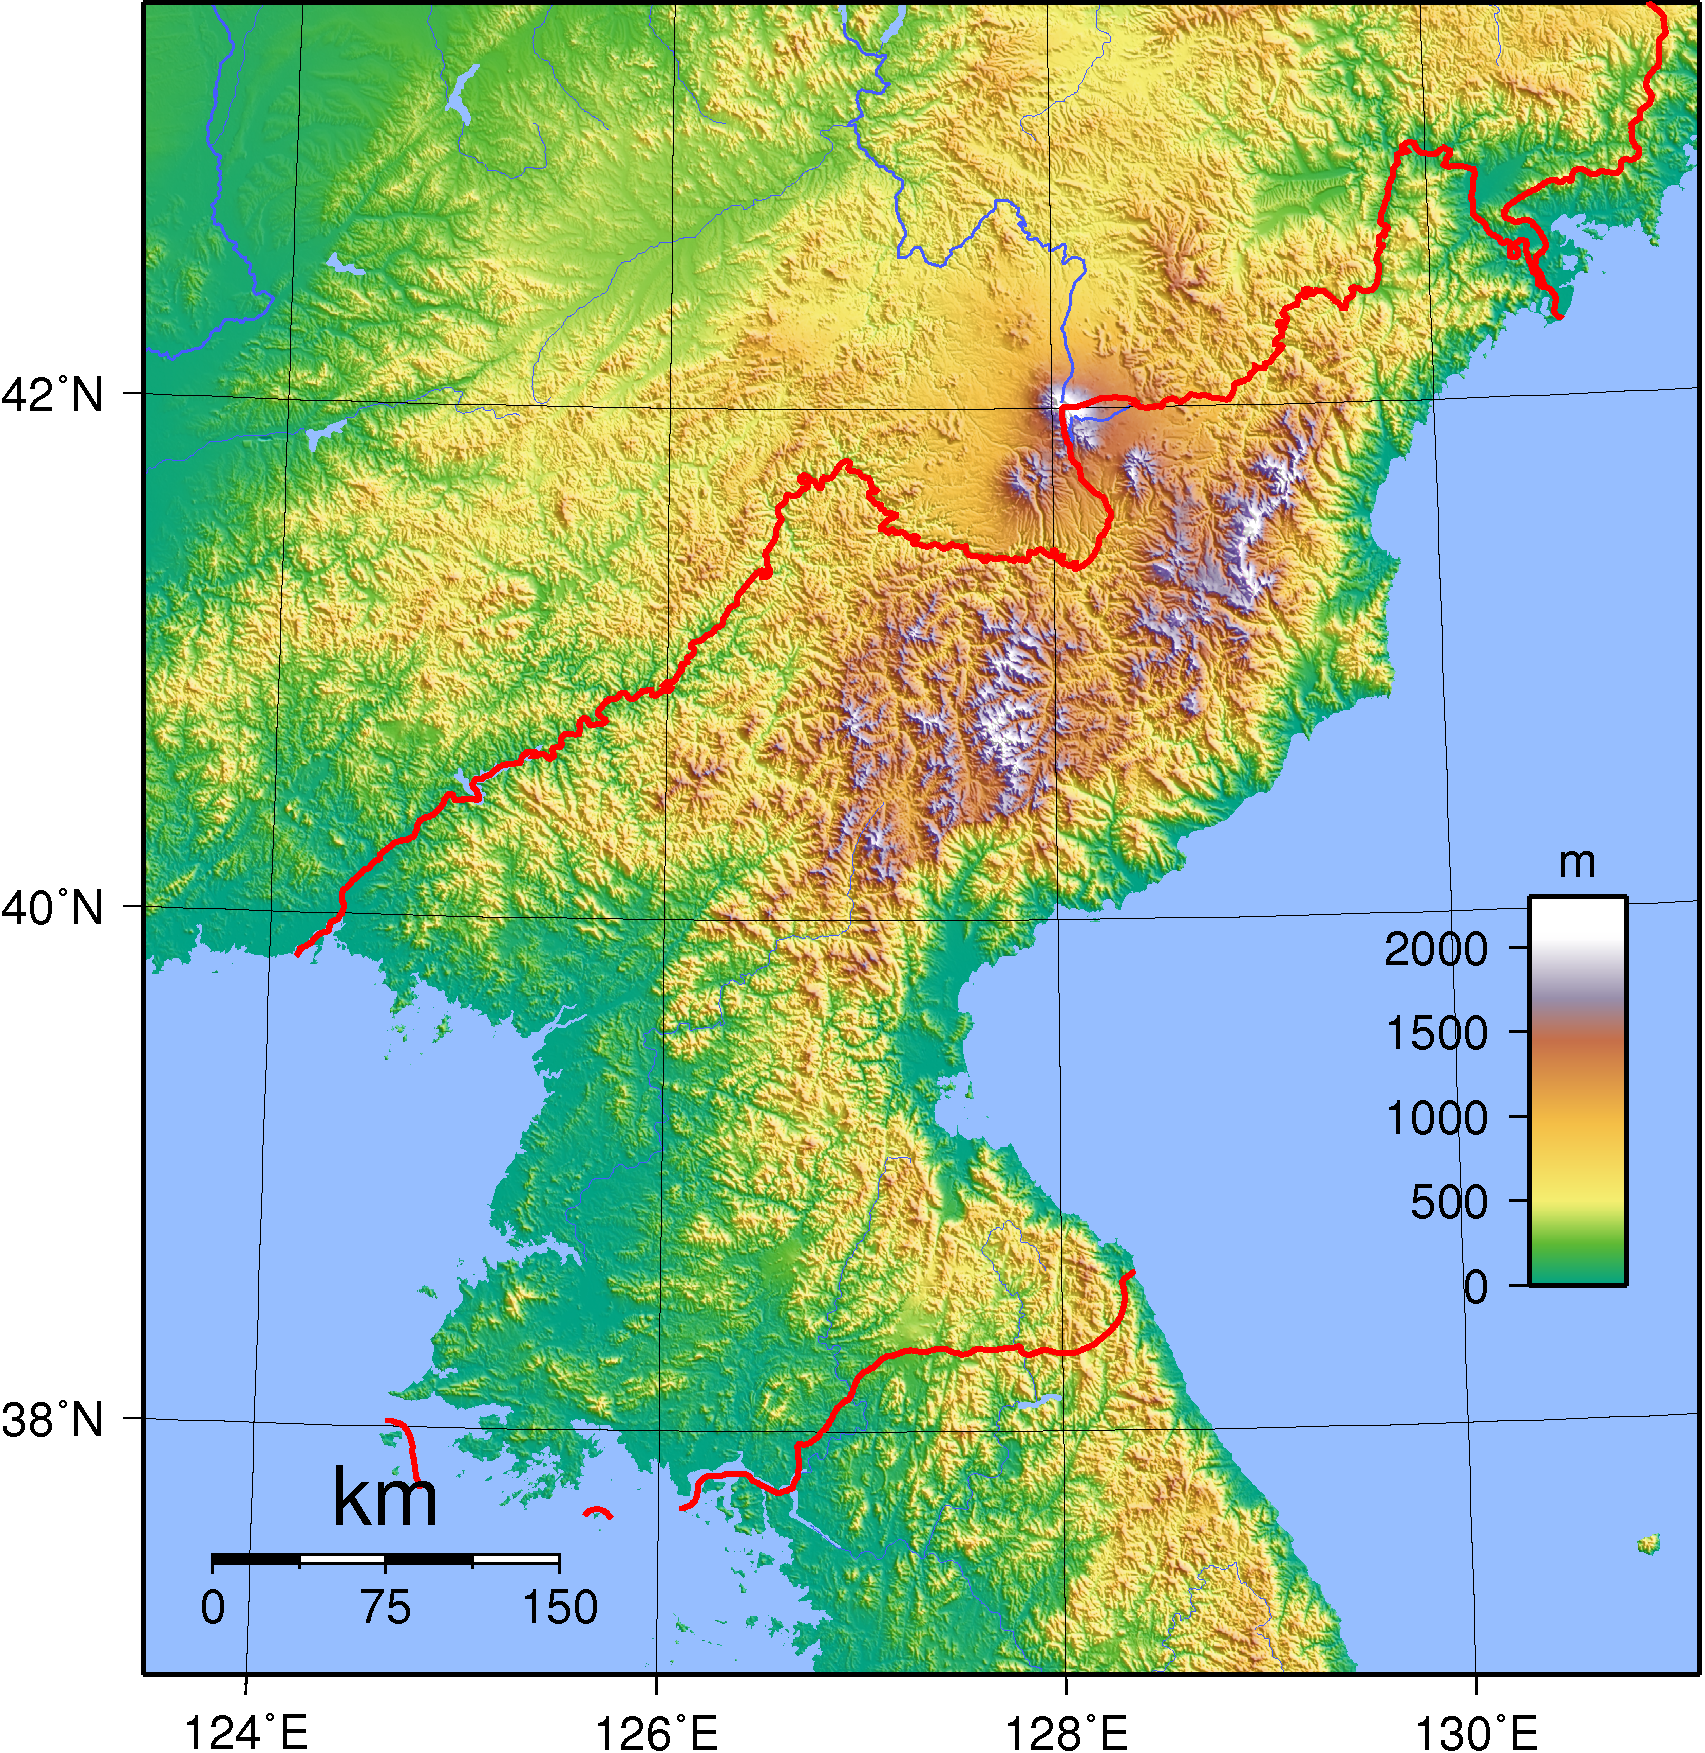 North_Korea_Topography.png